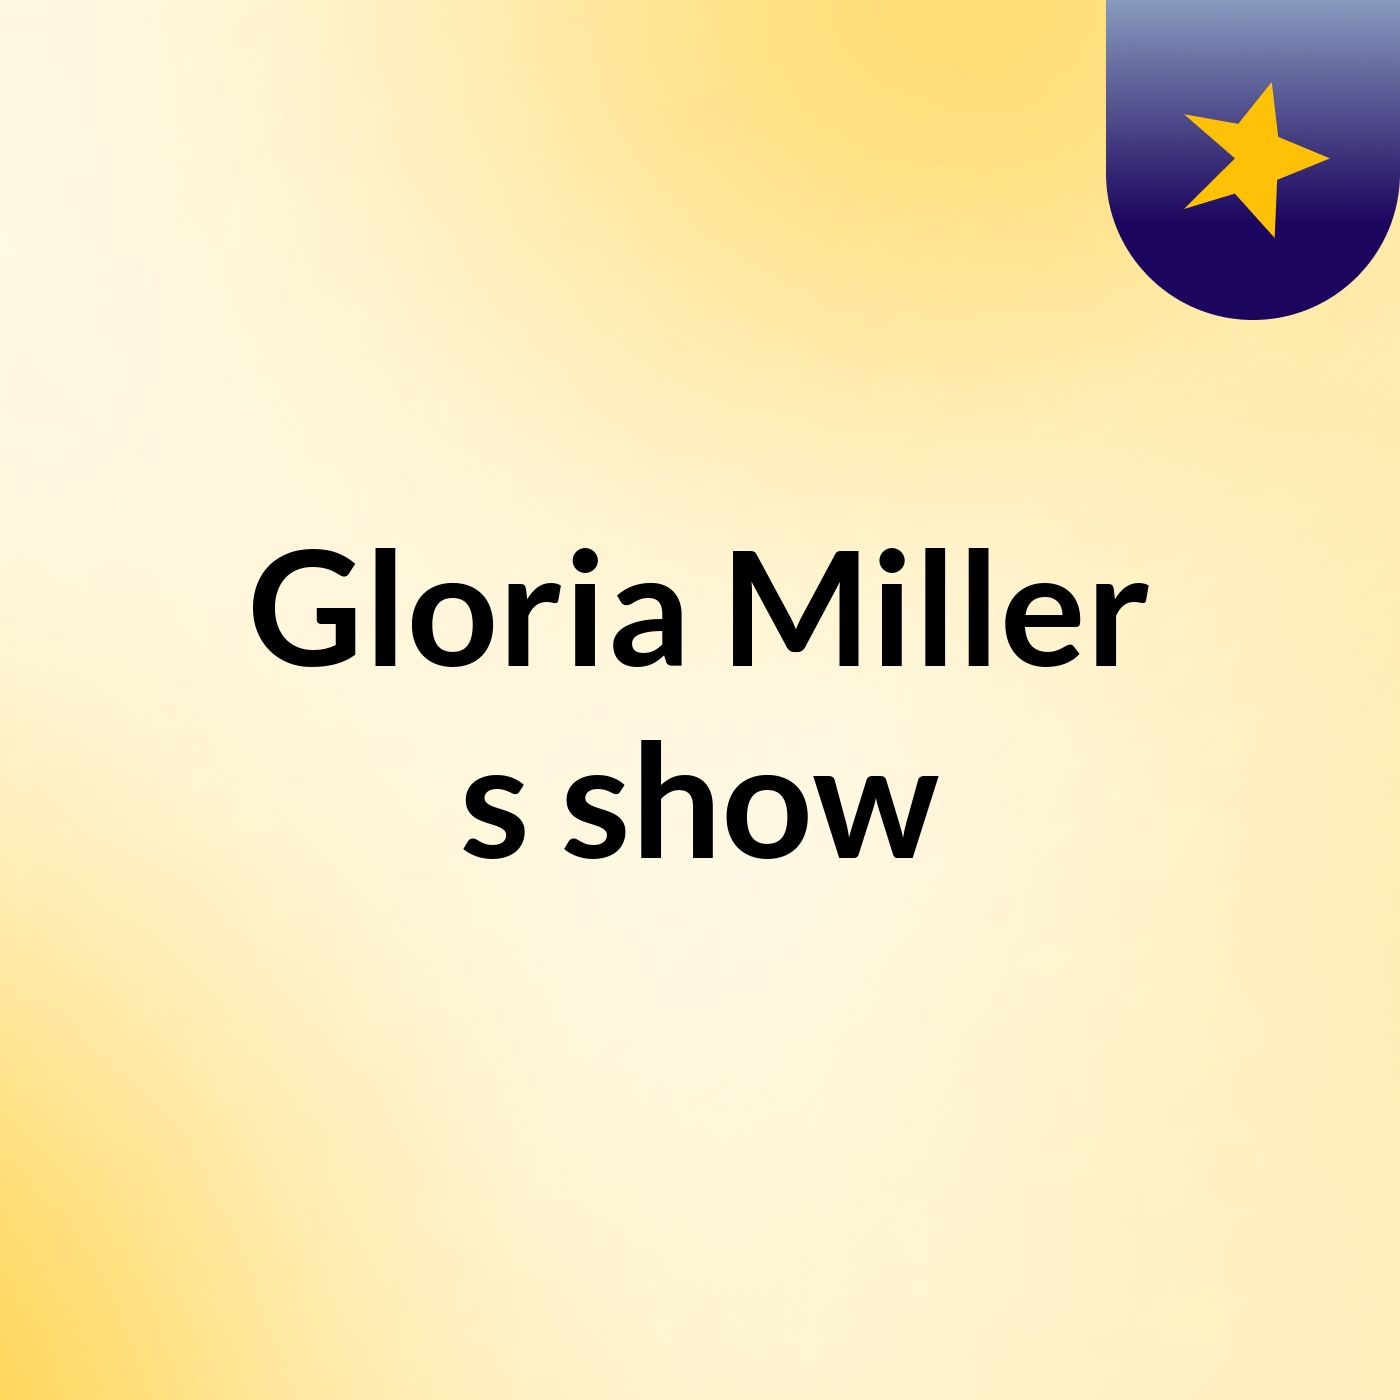 Gloria Miller's show